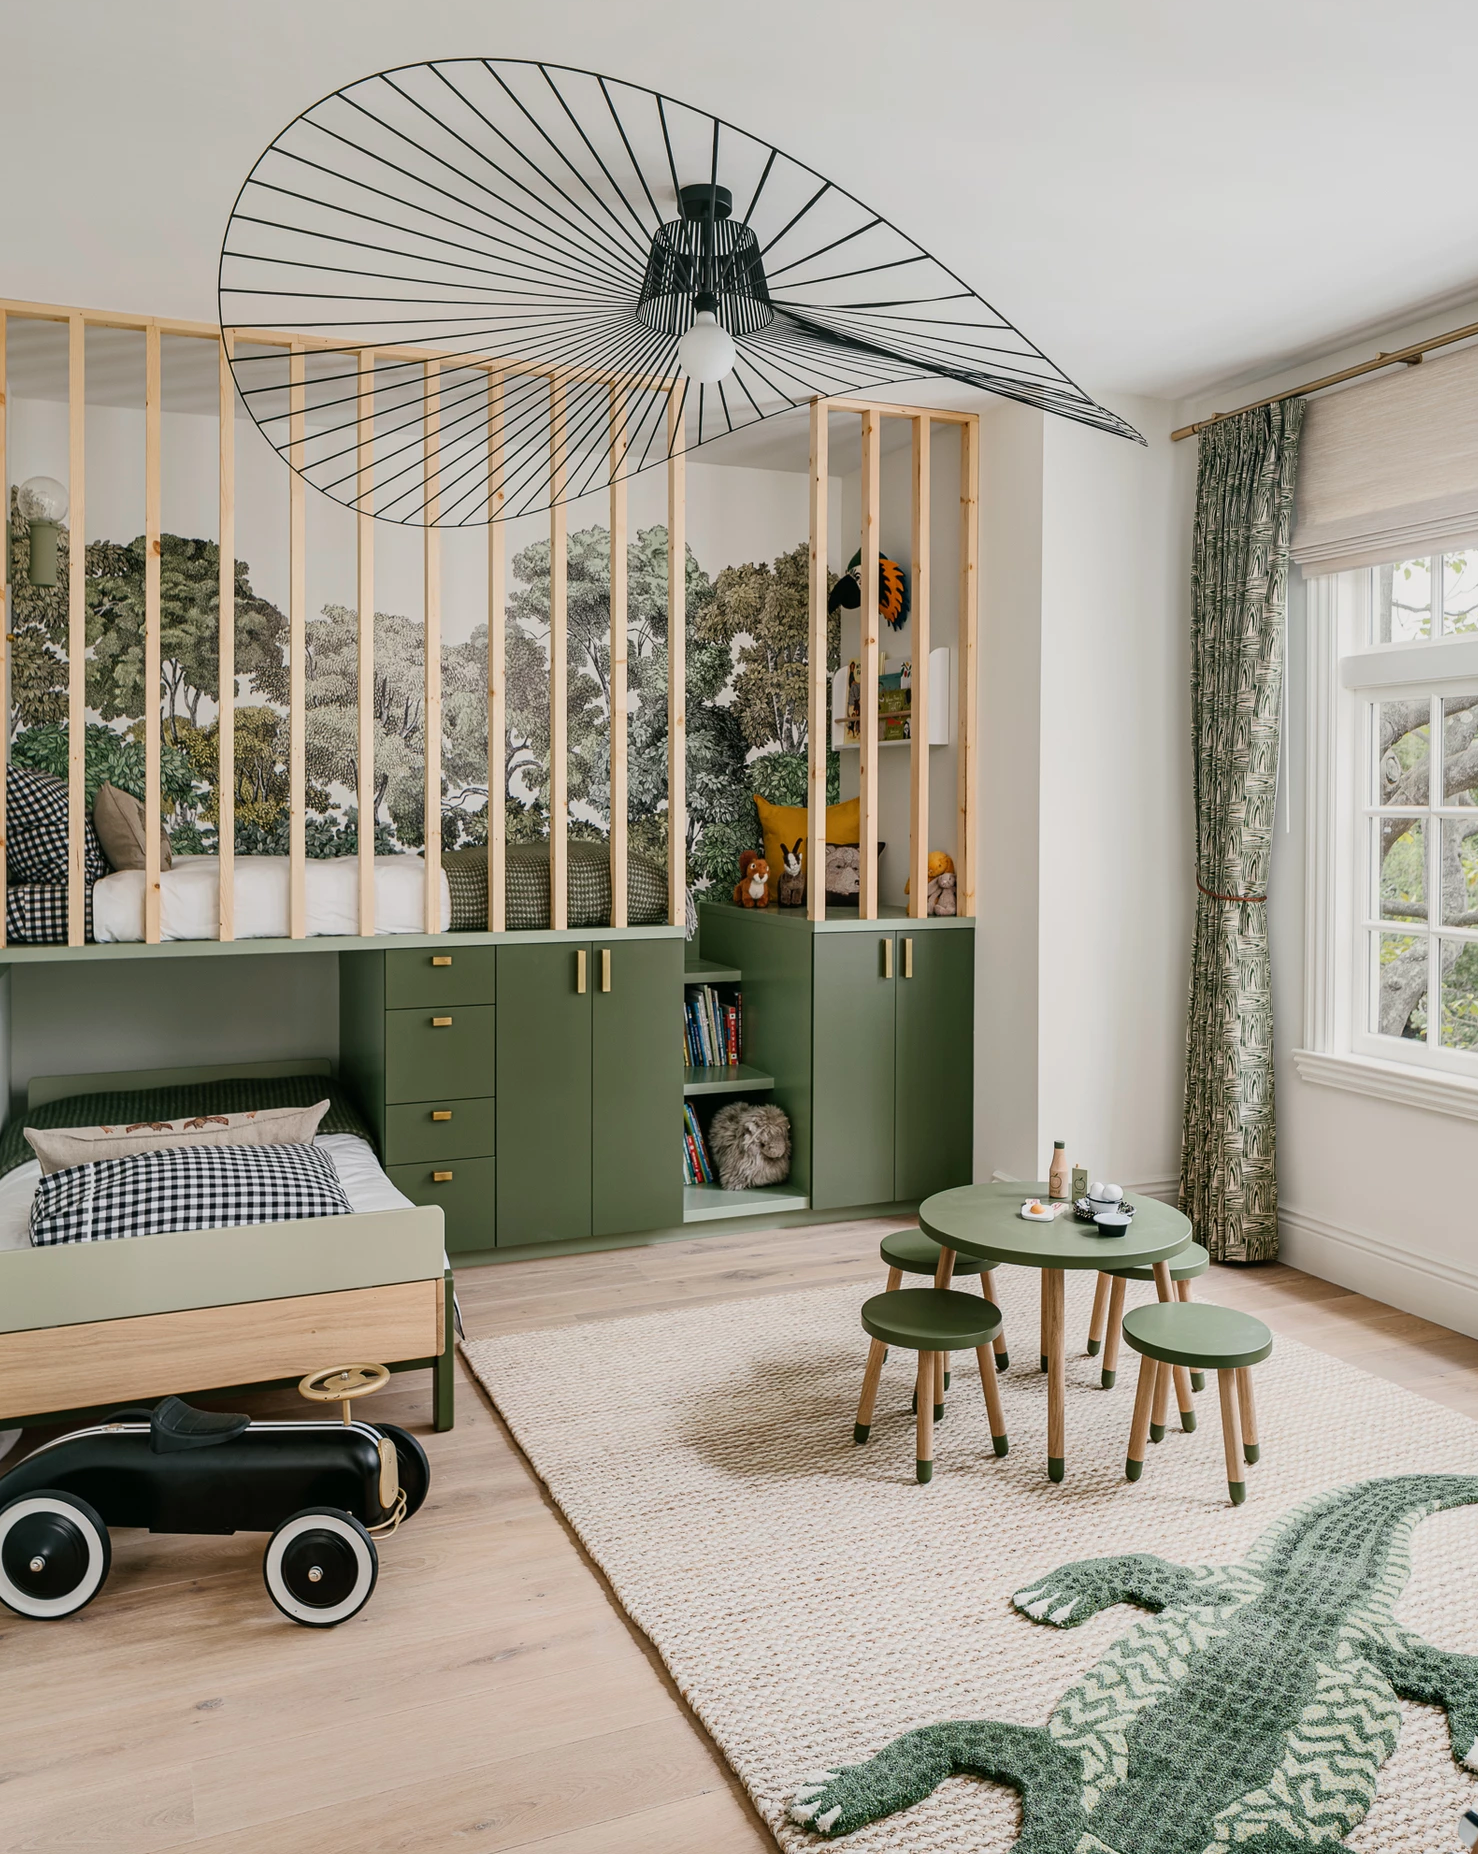 diy-bunk-bed-ideas-jungle-animal-safari-wall-art-prints-kids-green-bedroom-decor-playroom